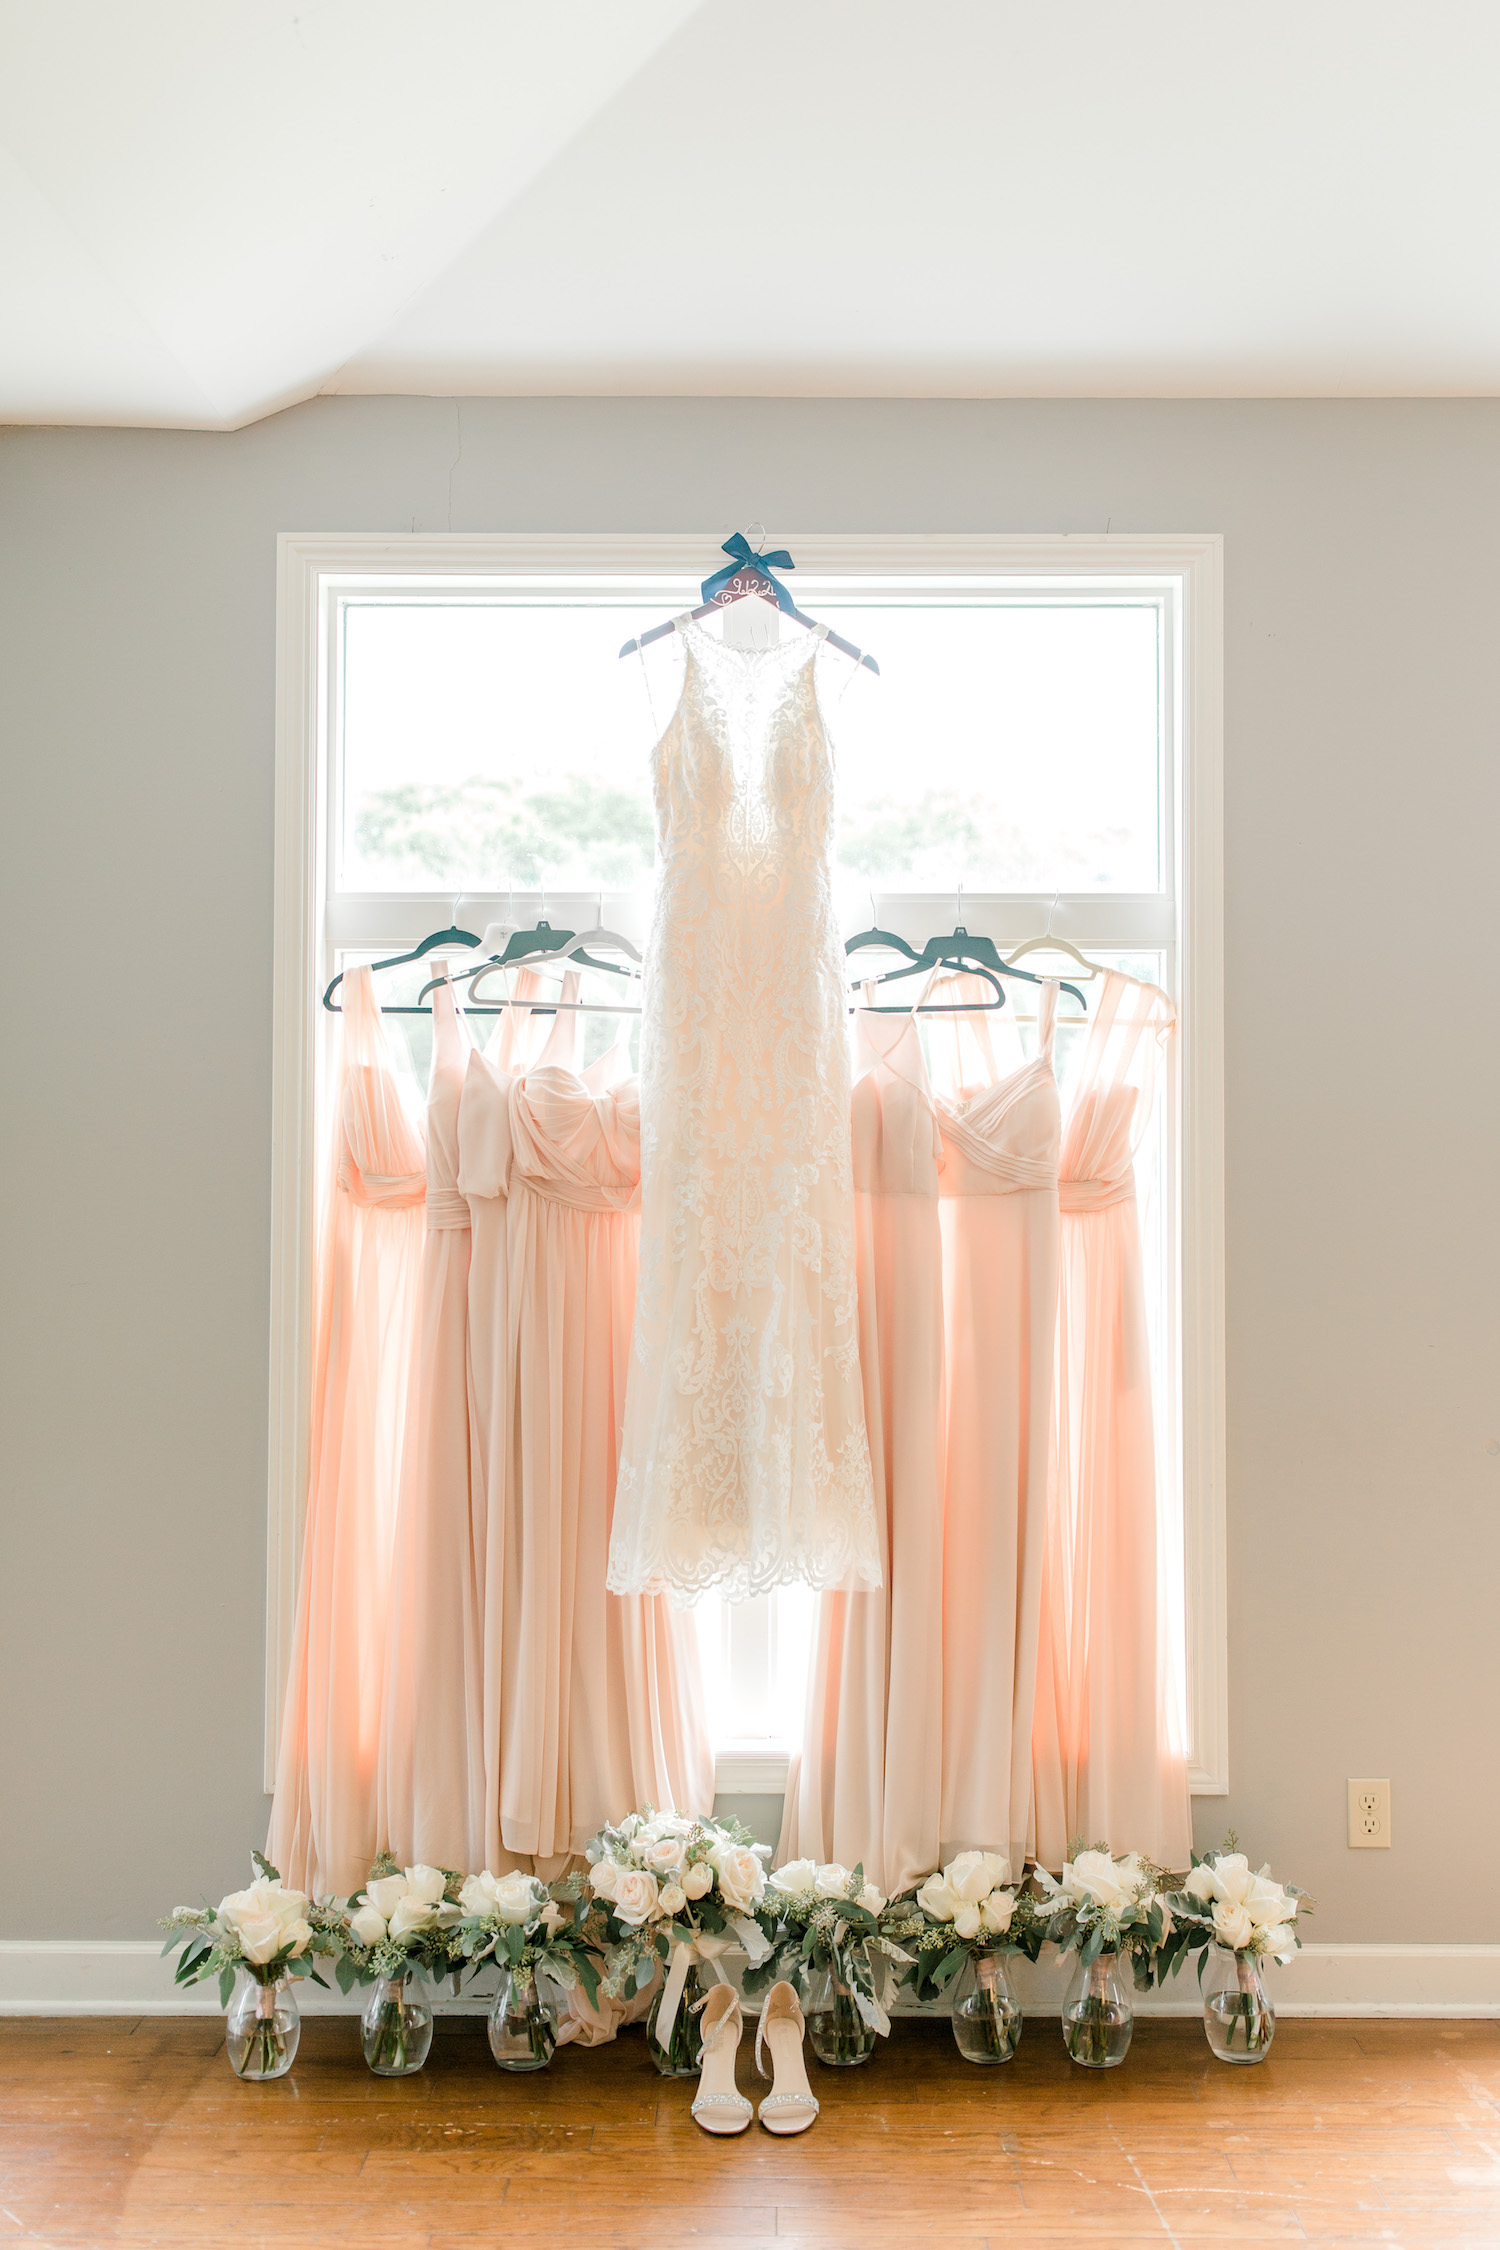 Brides dress hanging with bridesmaids dresses